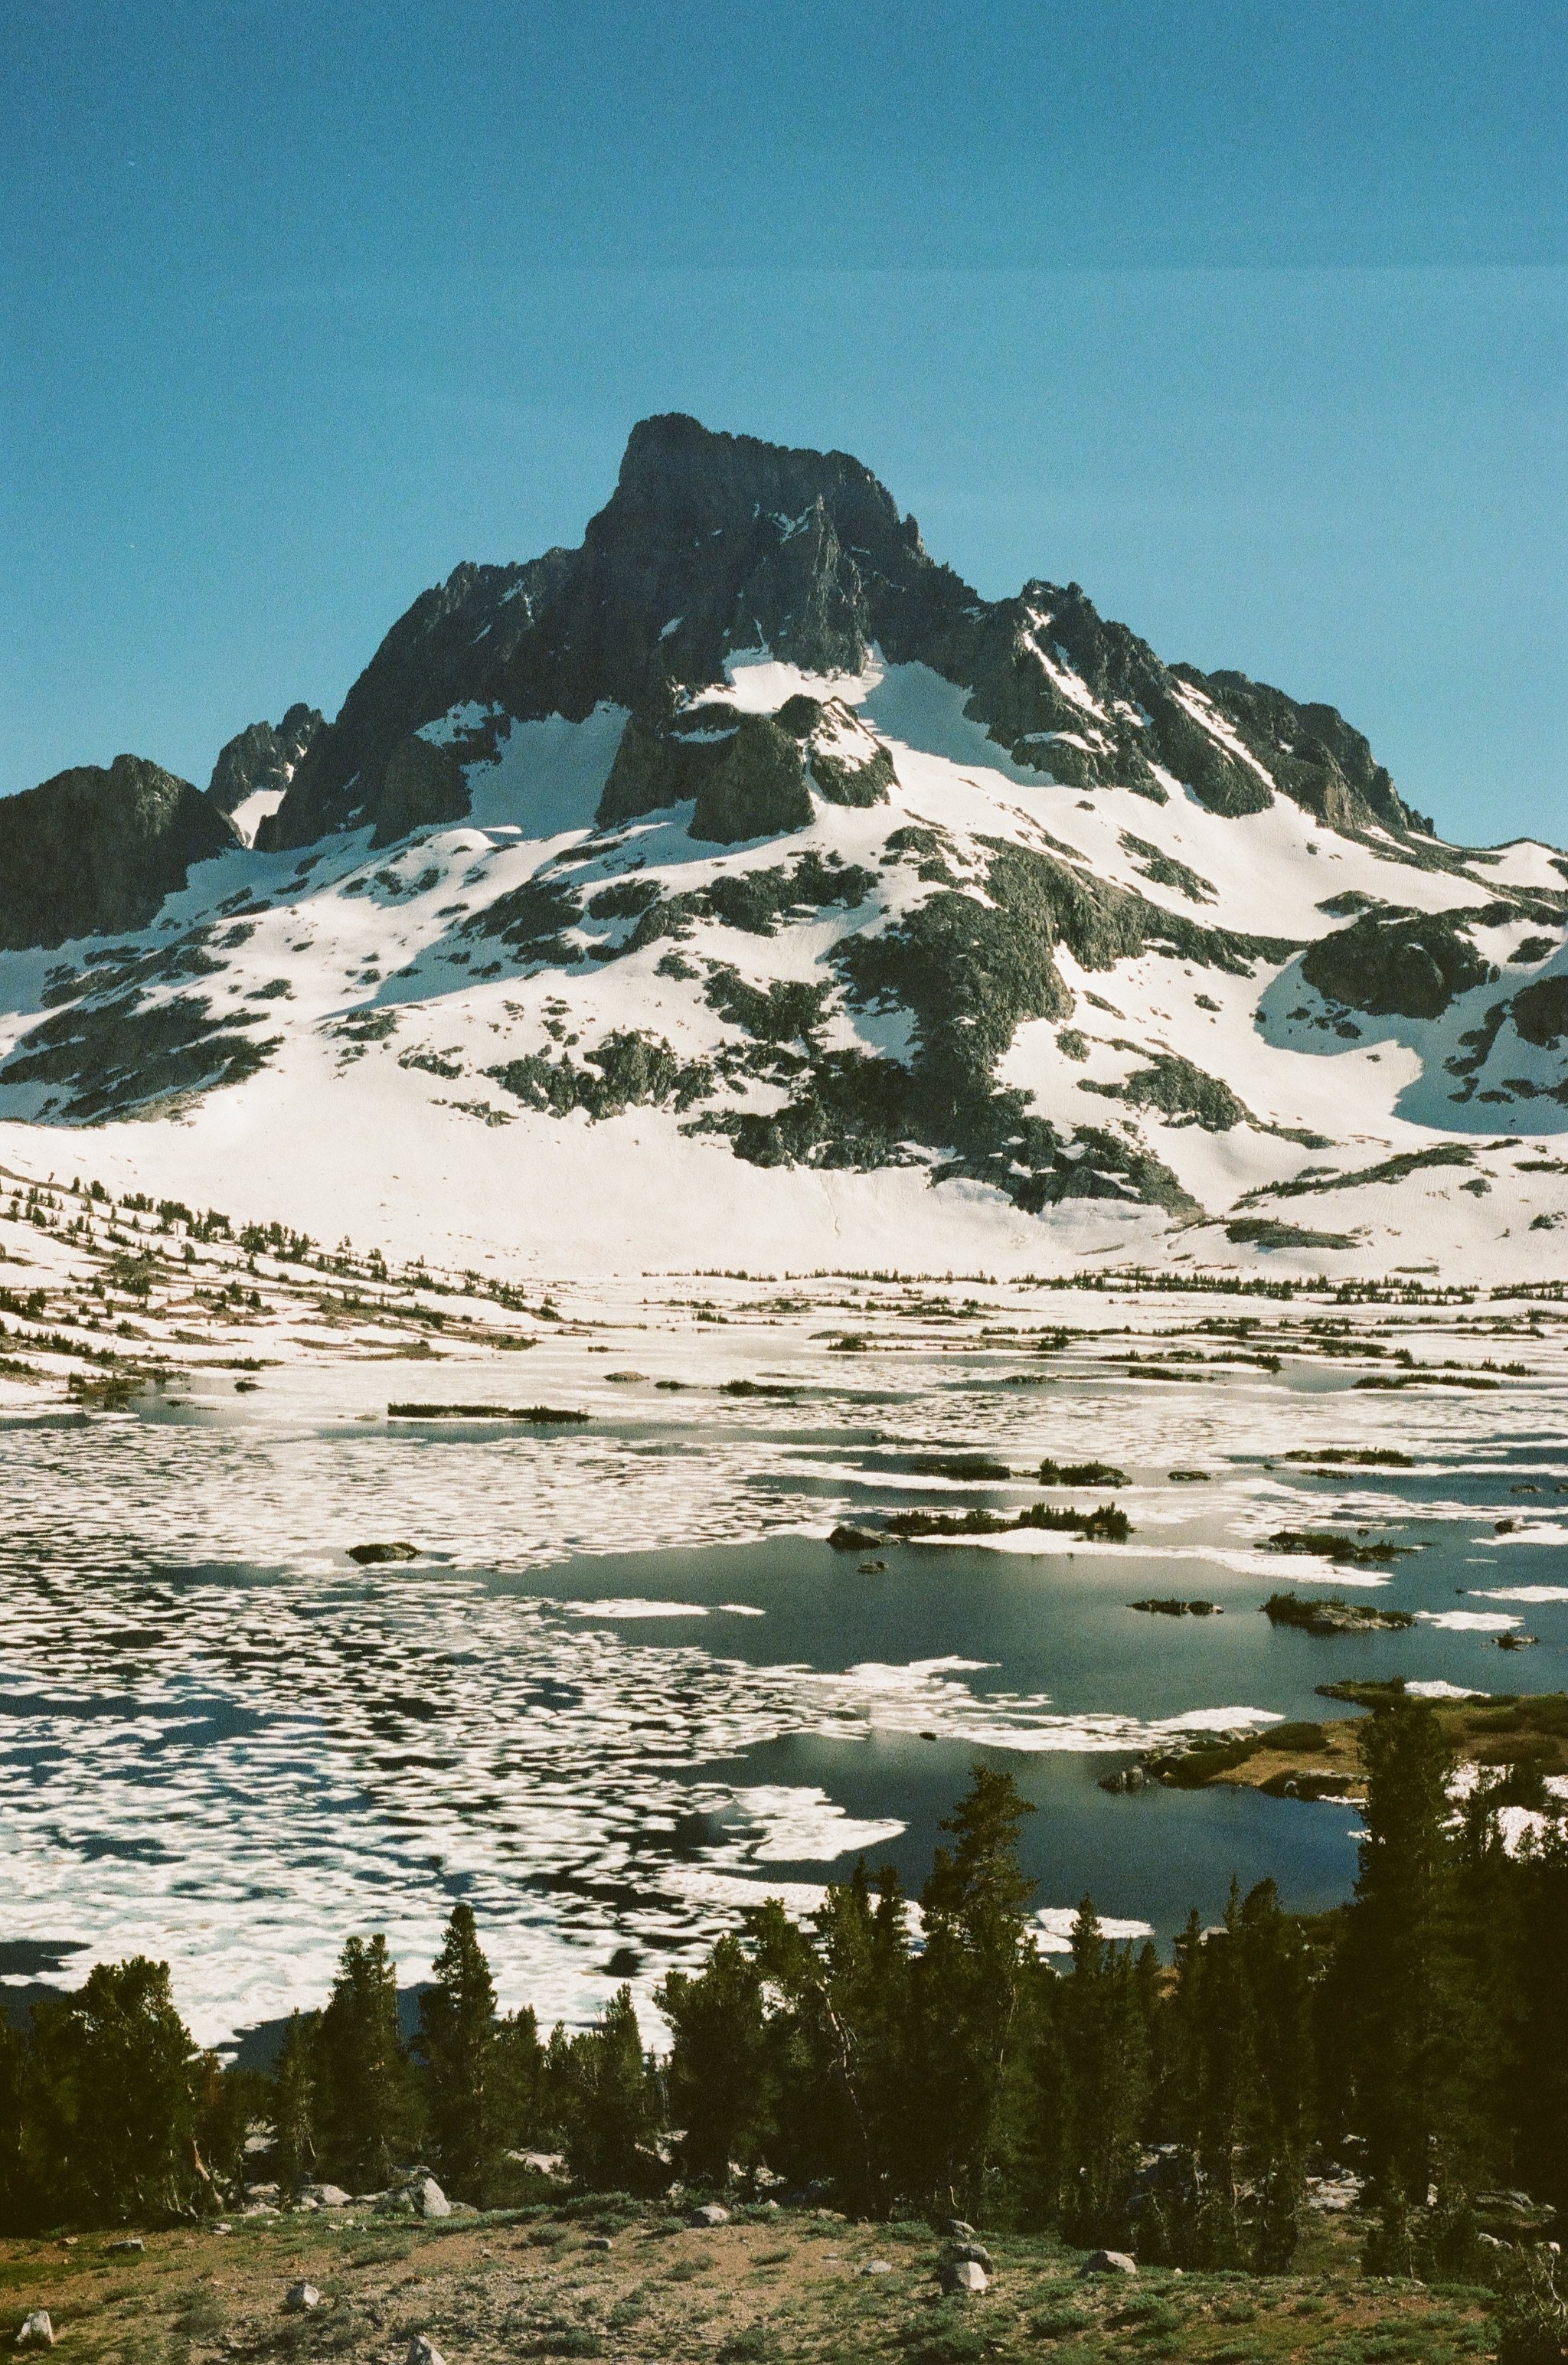  Thousand Island Lake, 35mm film 